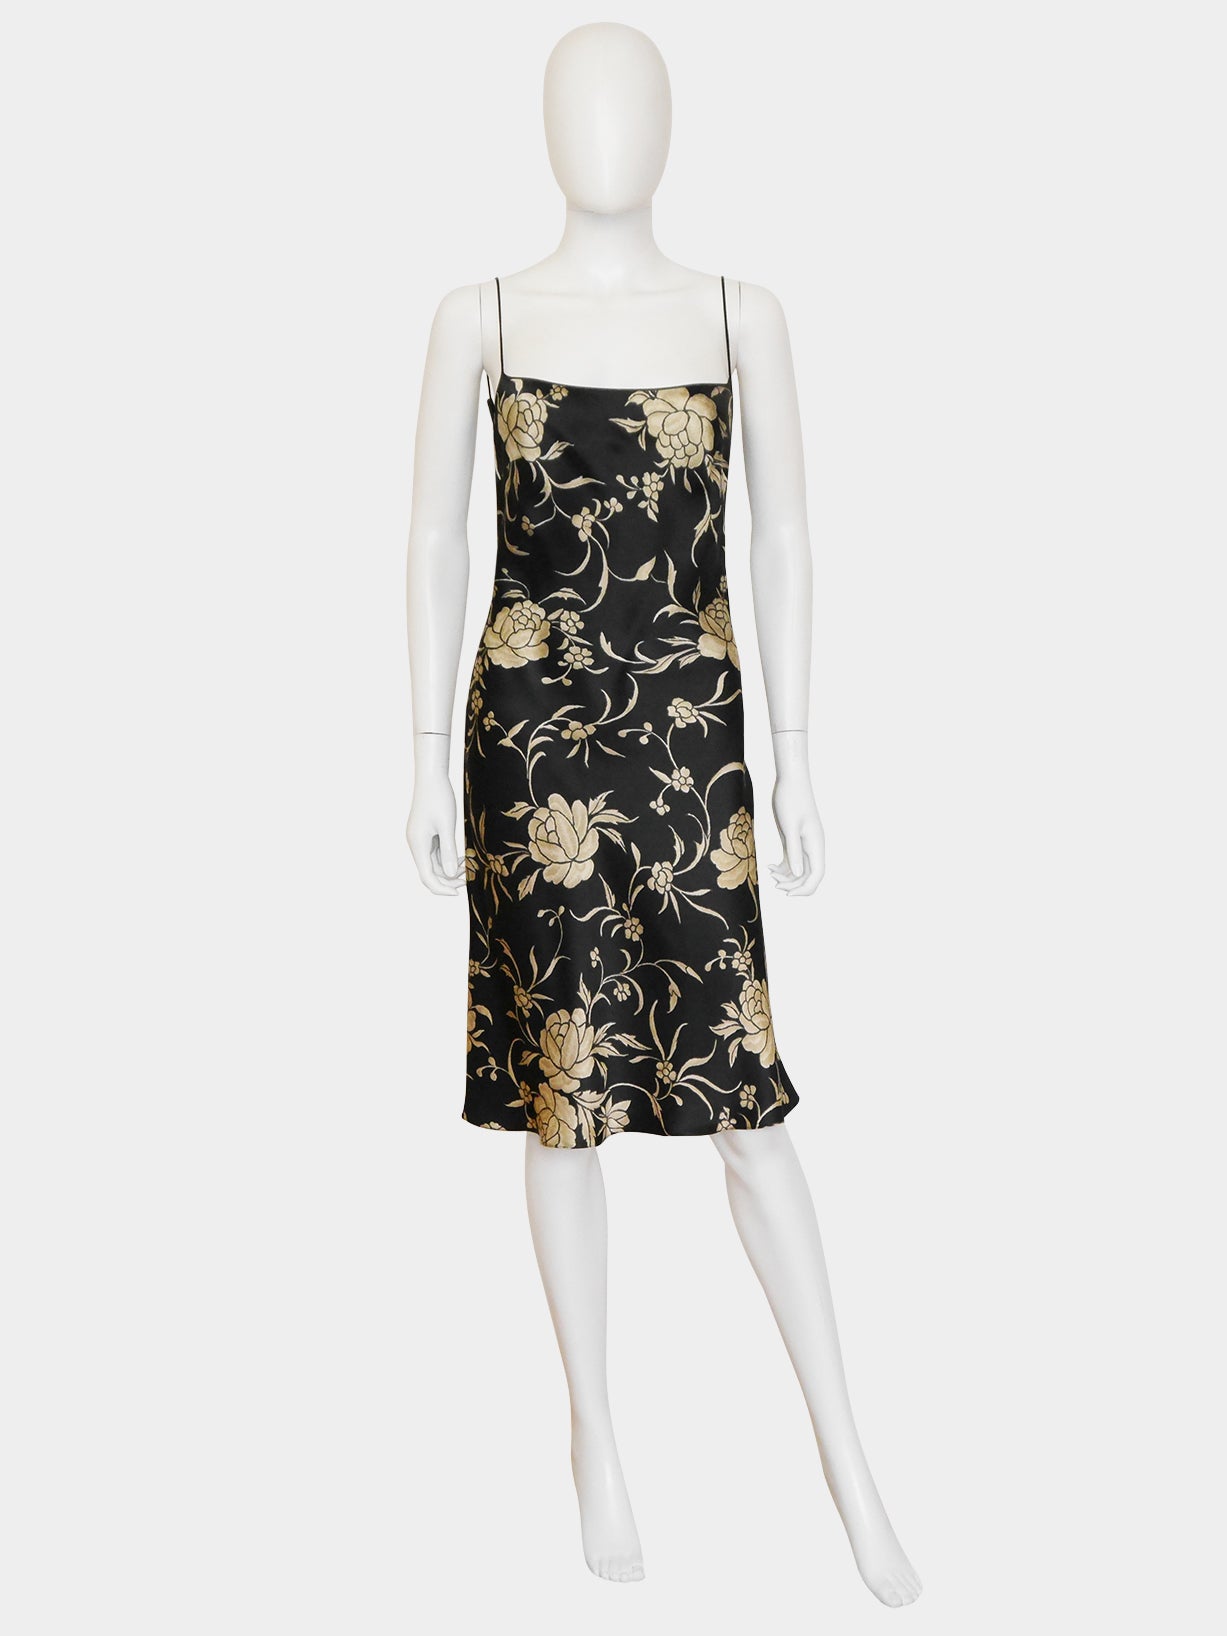 JOHN GALLIANO Spring 1997 Vintage Floral Jacquard Slip Dress & Jacket Size S-M